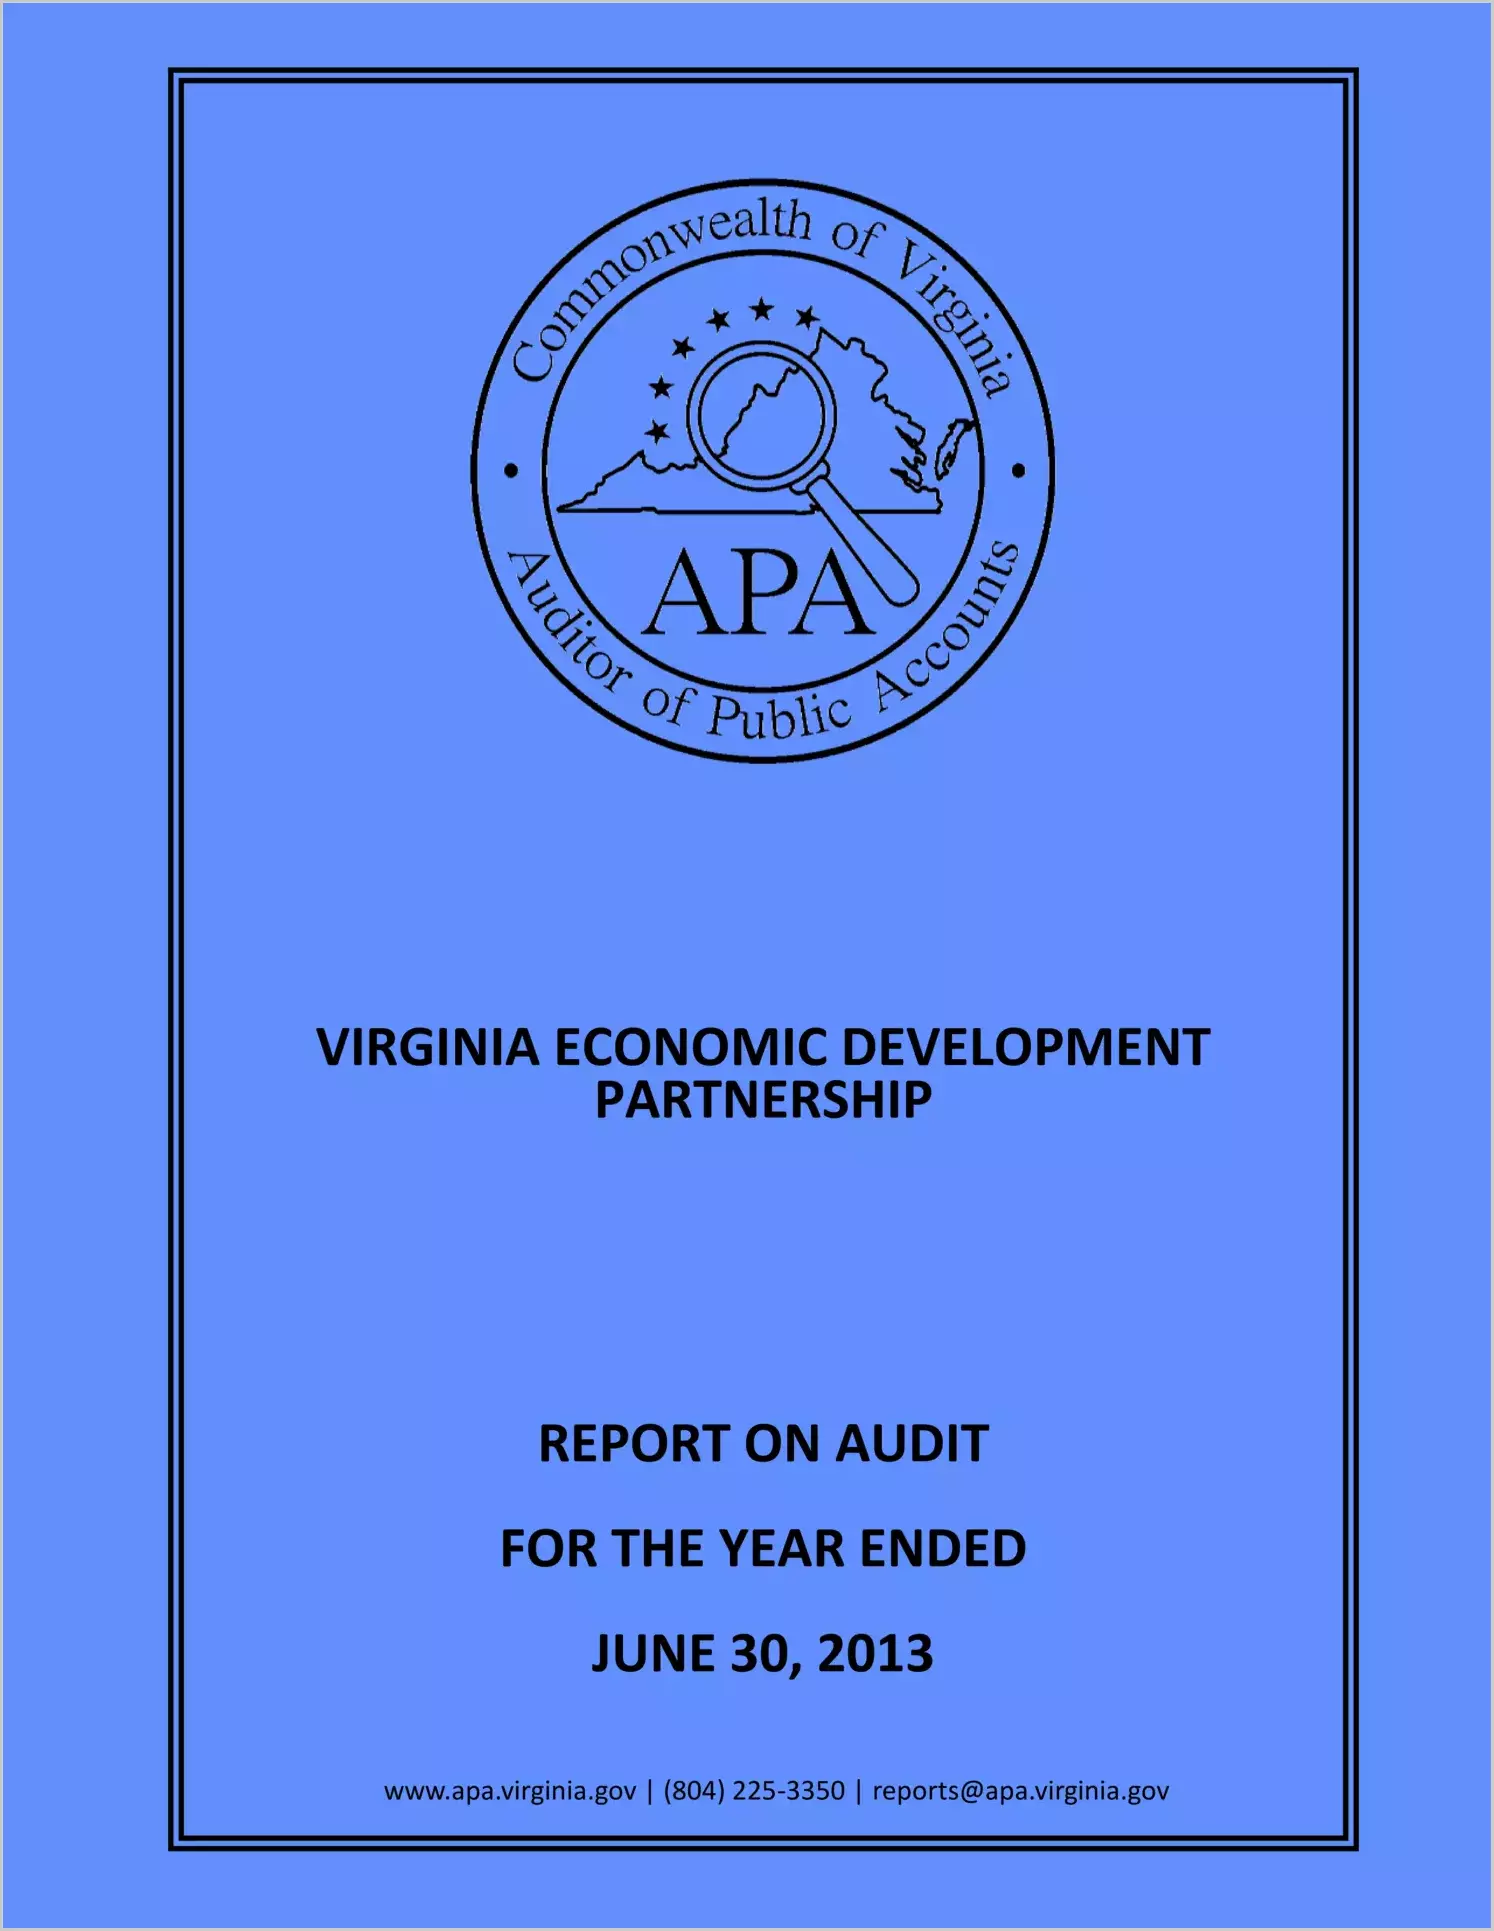 Virginia Economic Development Partnership for the year ended June 30, 2013